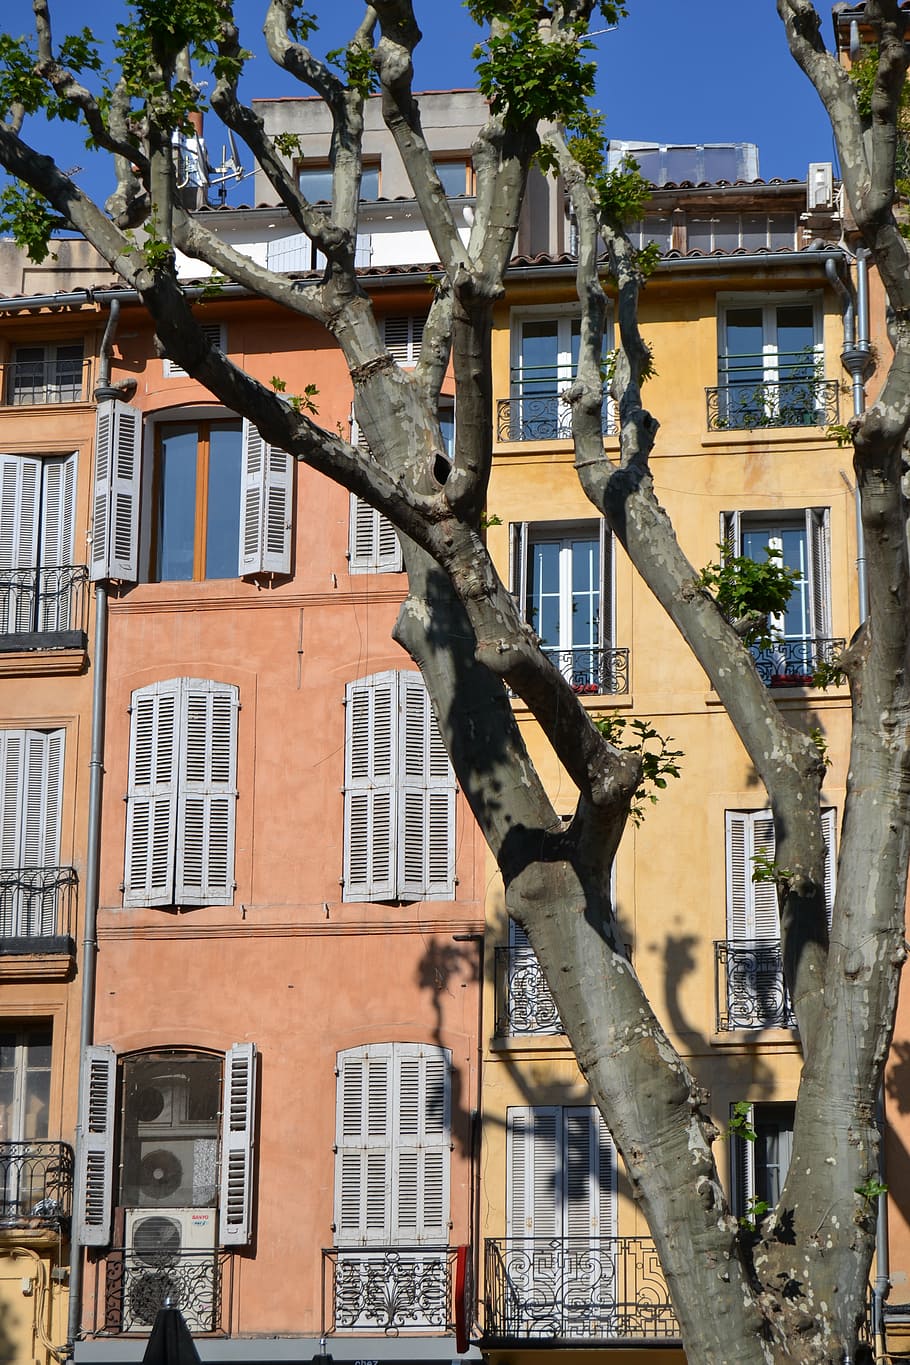 francia, provenza, aix-en-provence, sur de francia, fachadas, casas, árboles, exterior del edificio, arquitectura, estructura construida